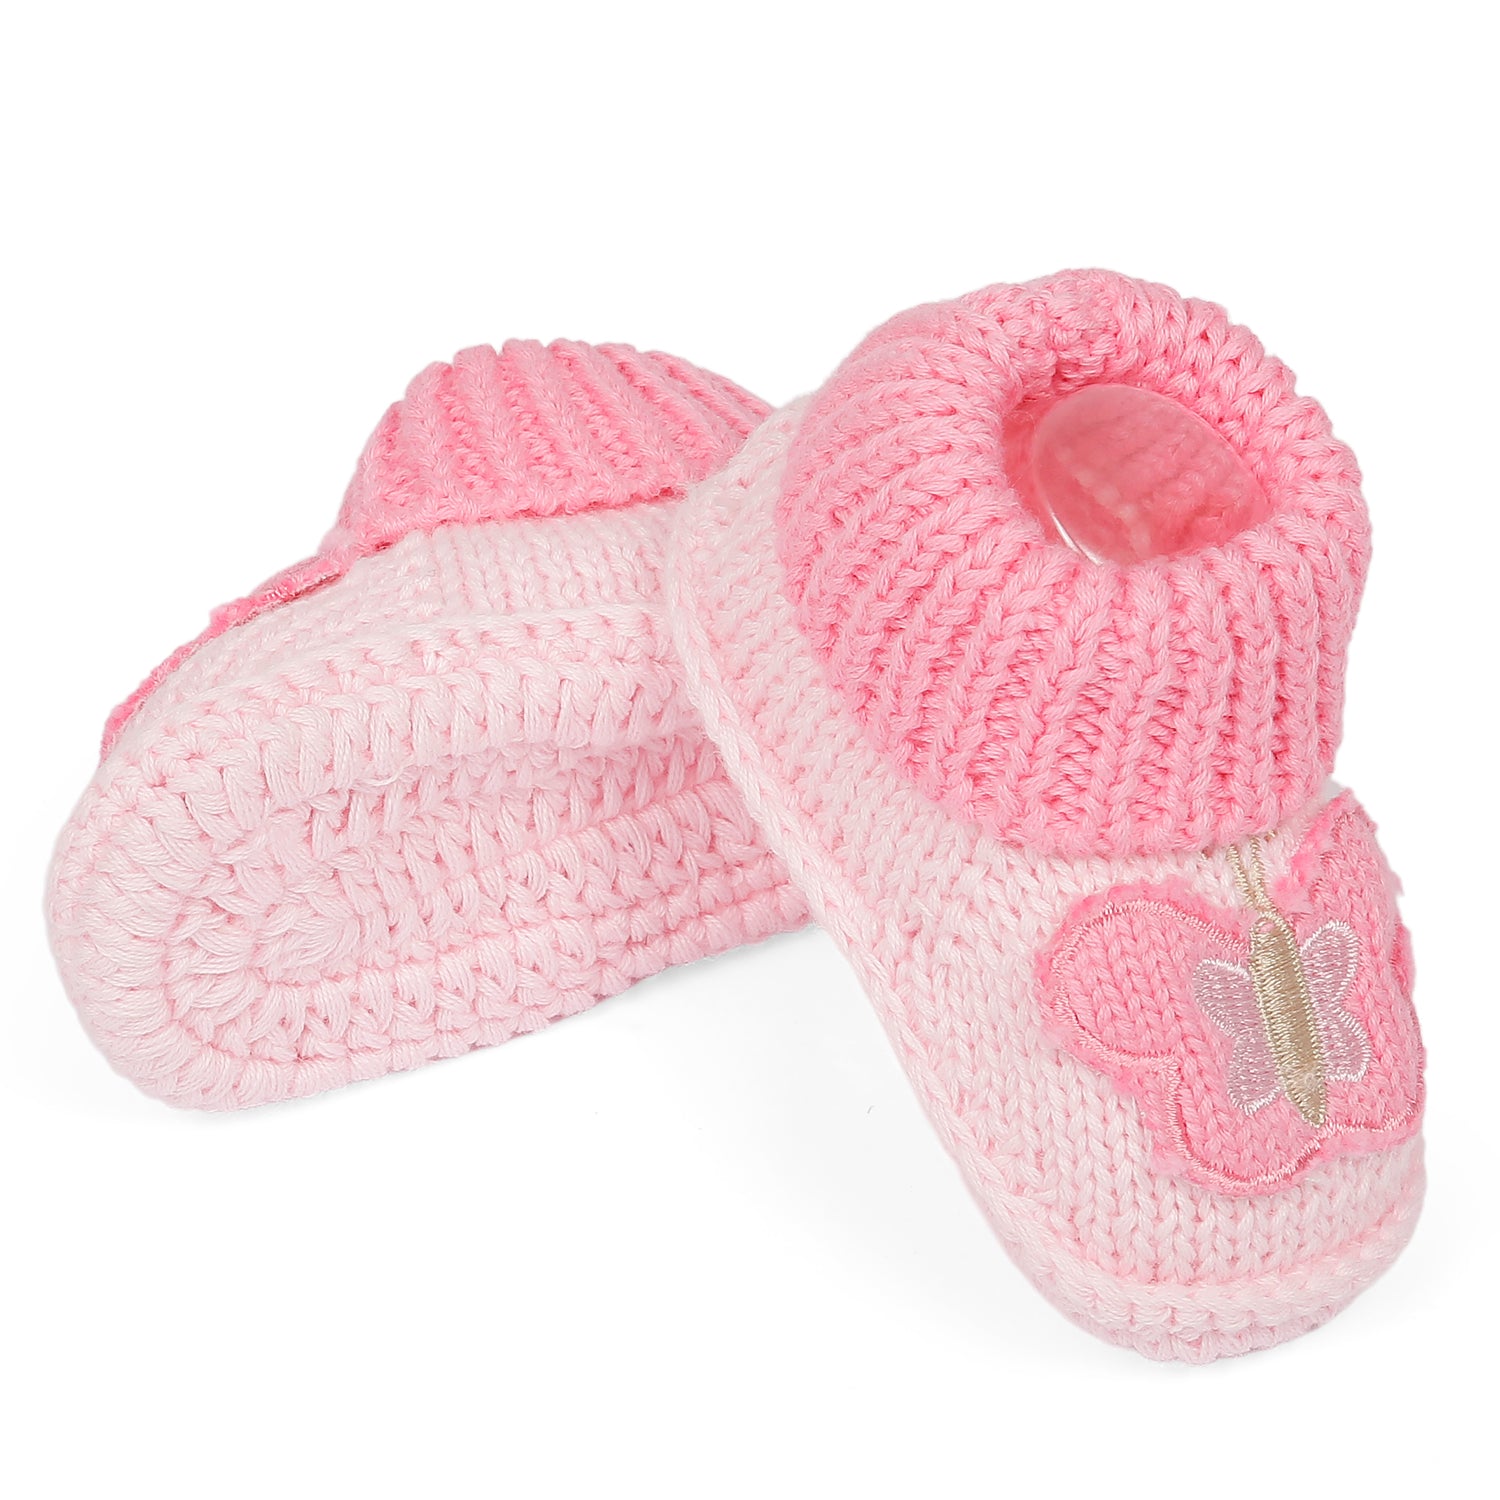 Butterfly Newborn Crochet Socks Booties - Pink